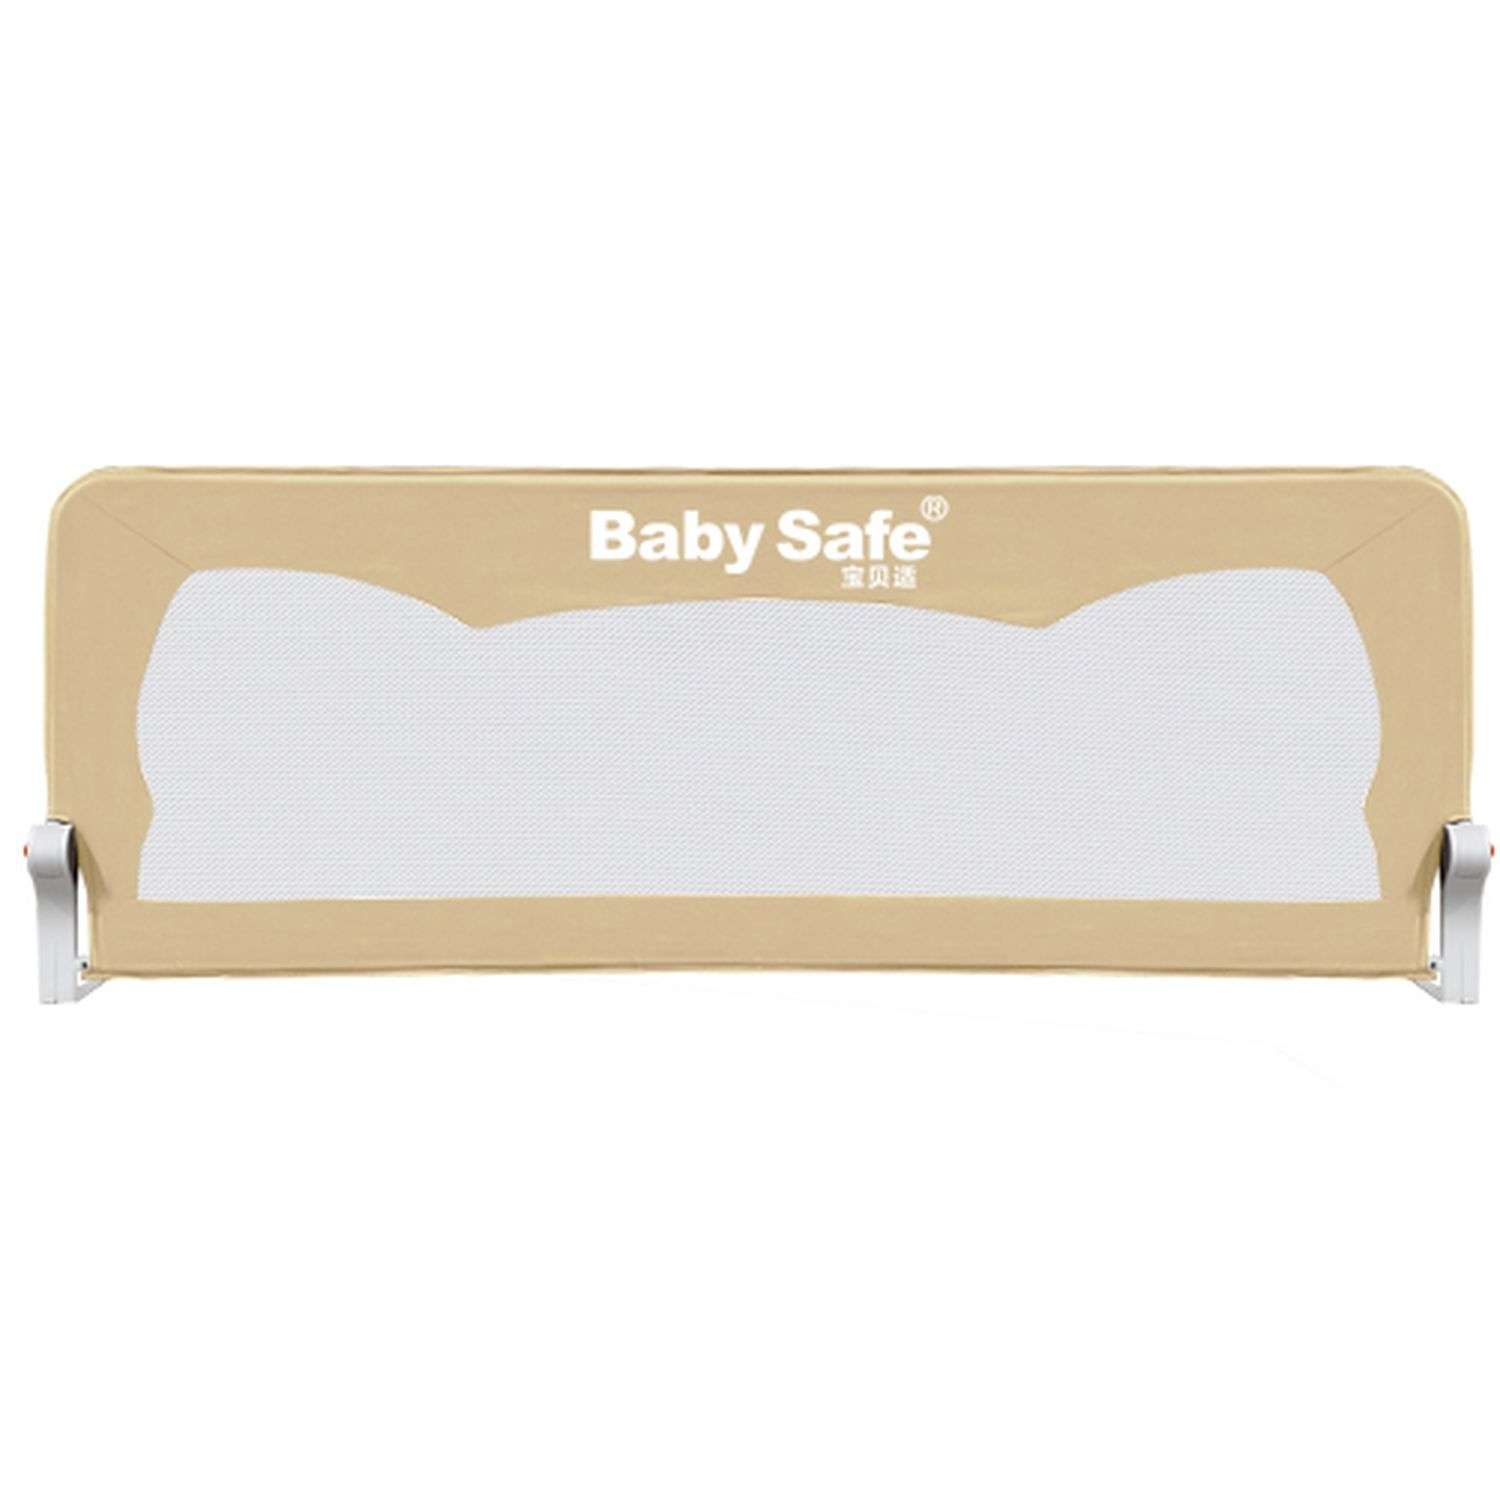 Барьер защитный для кровати Baby Safe защитный для кровати Ушки 120х66 бежевый - фото 2